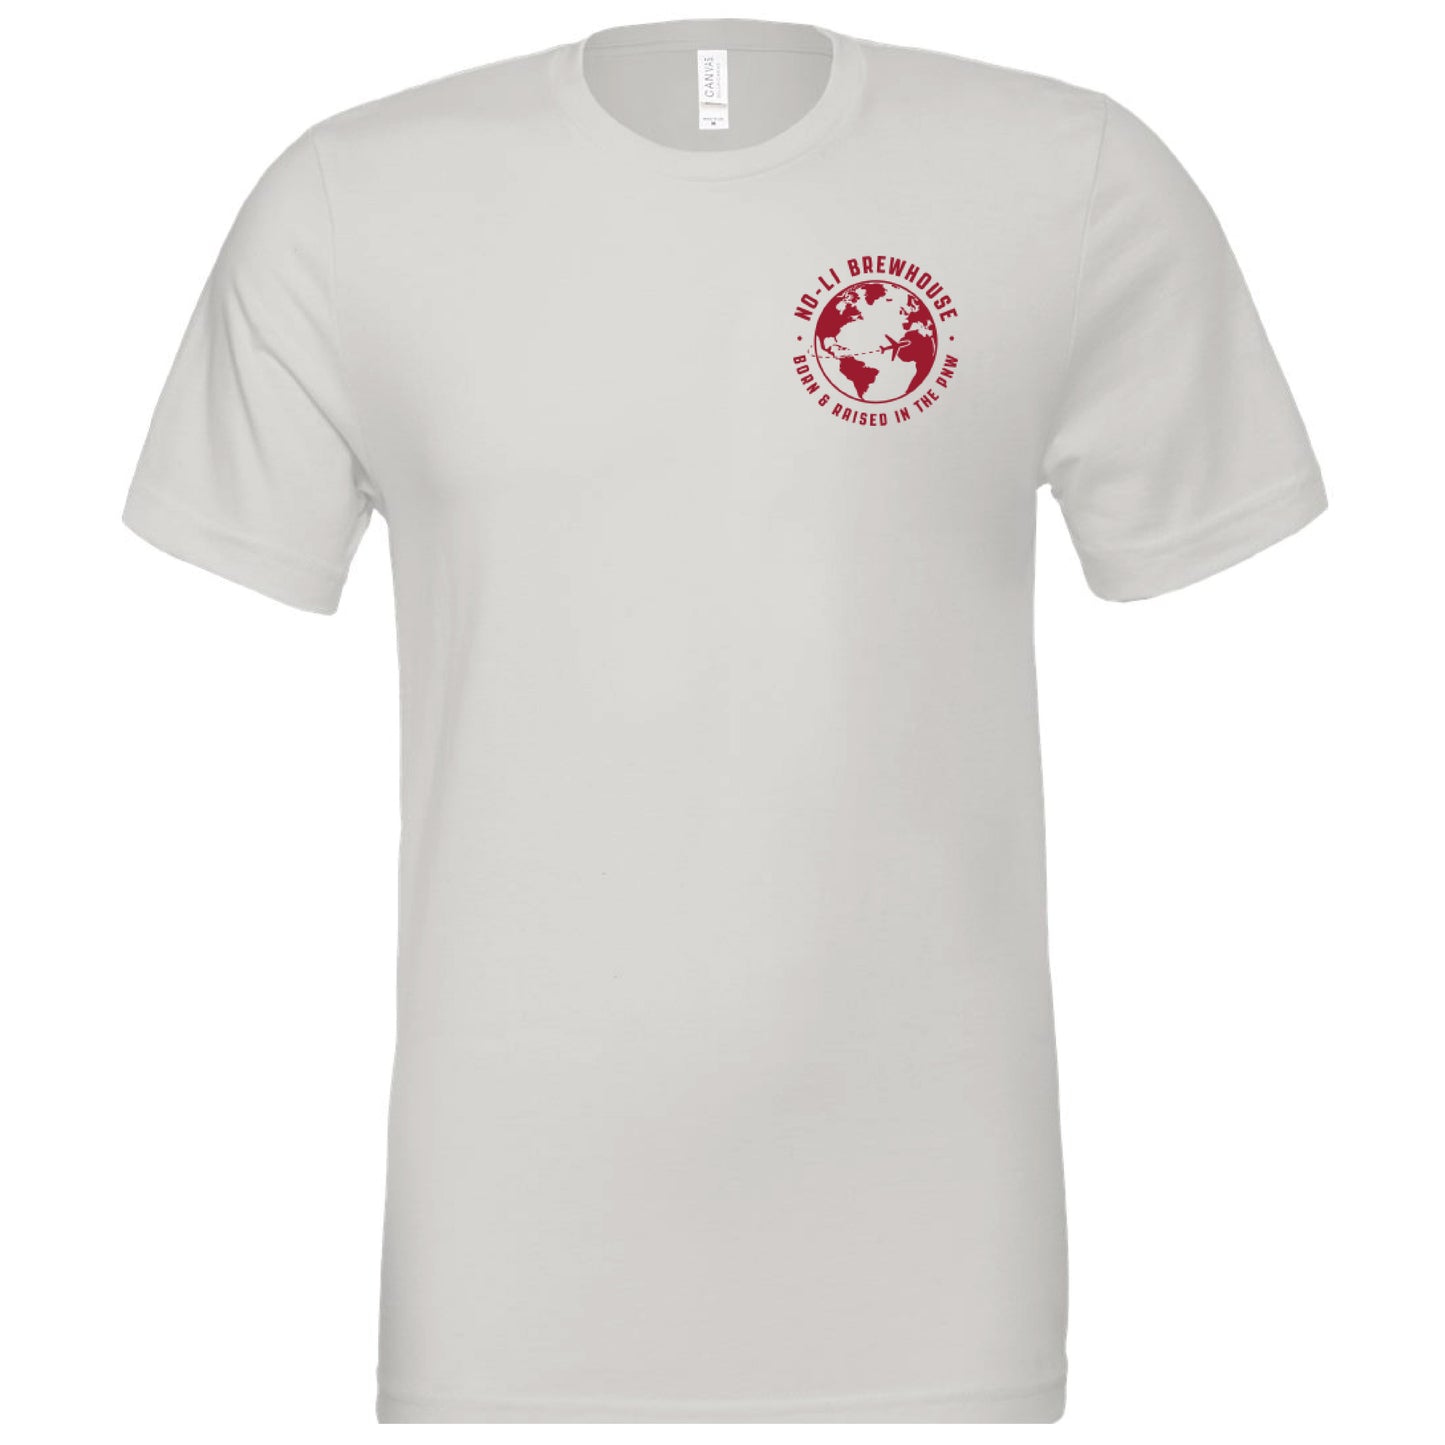 No-Li Worldwide T-Shirt